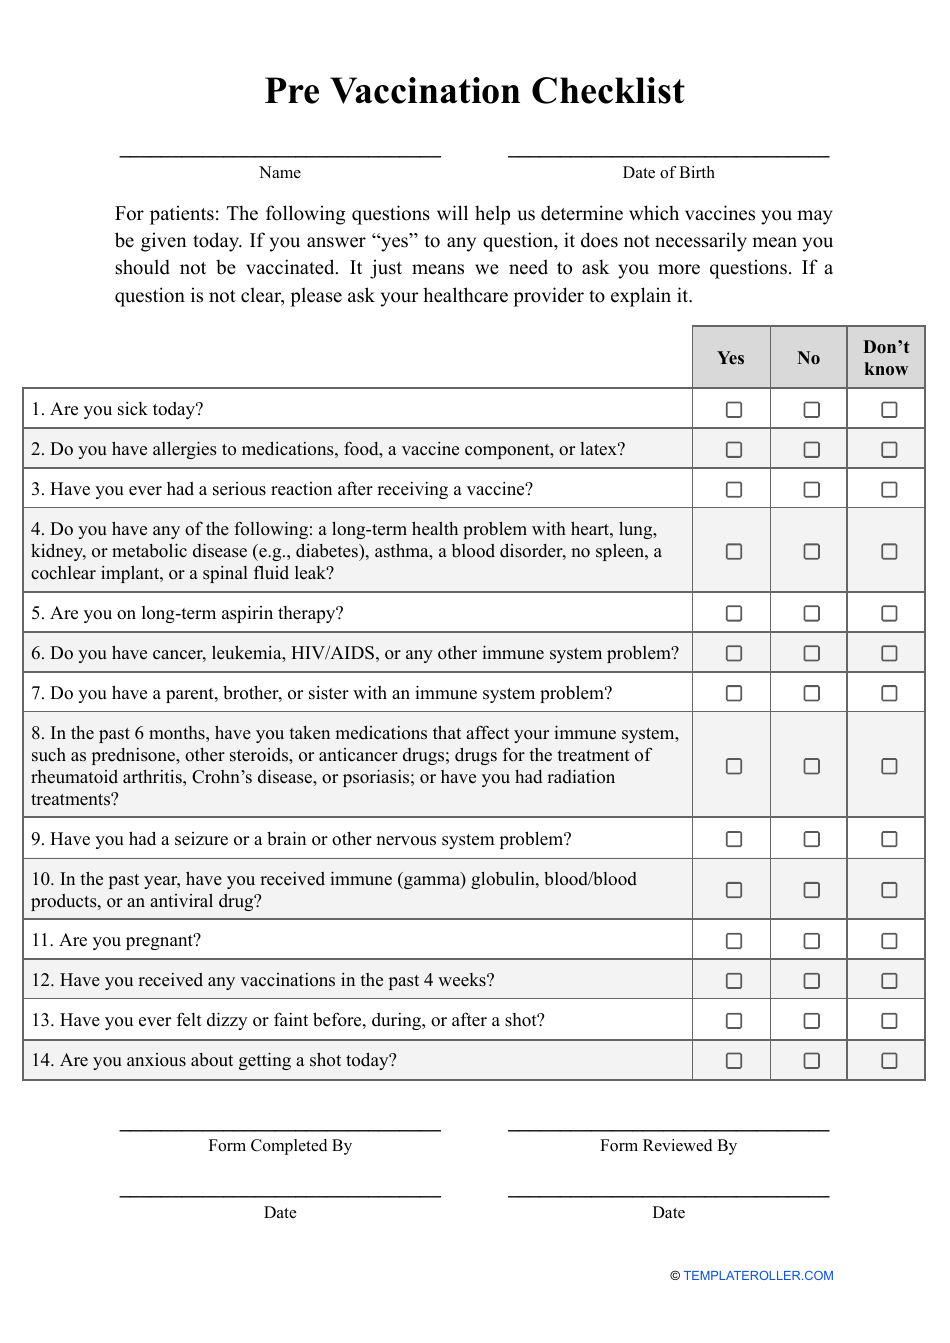 Prevaccination Checklist - Template Image